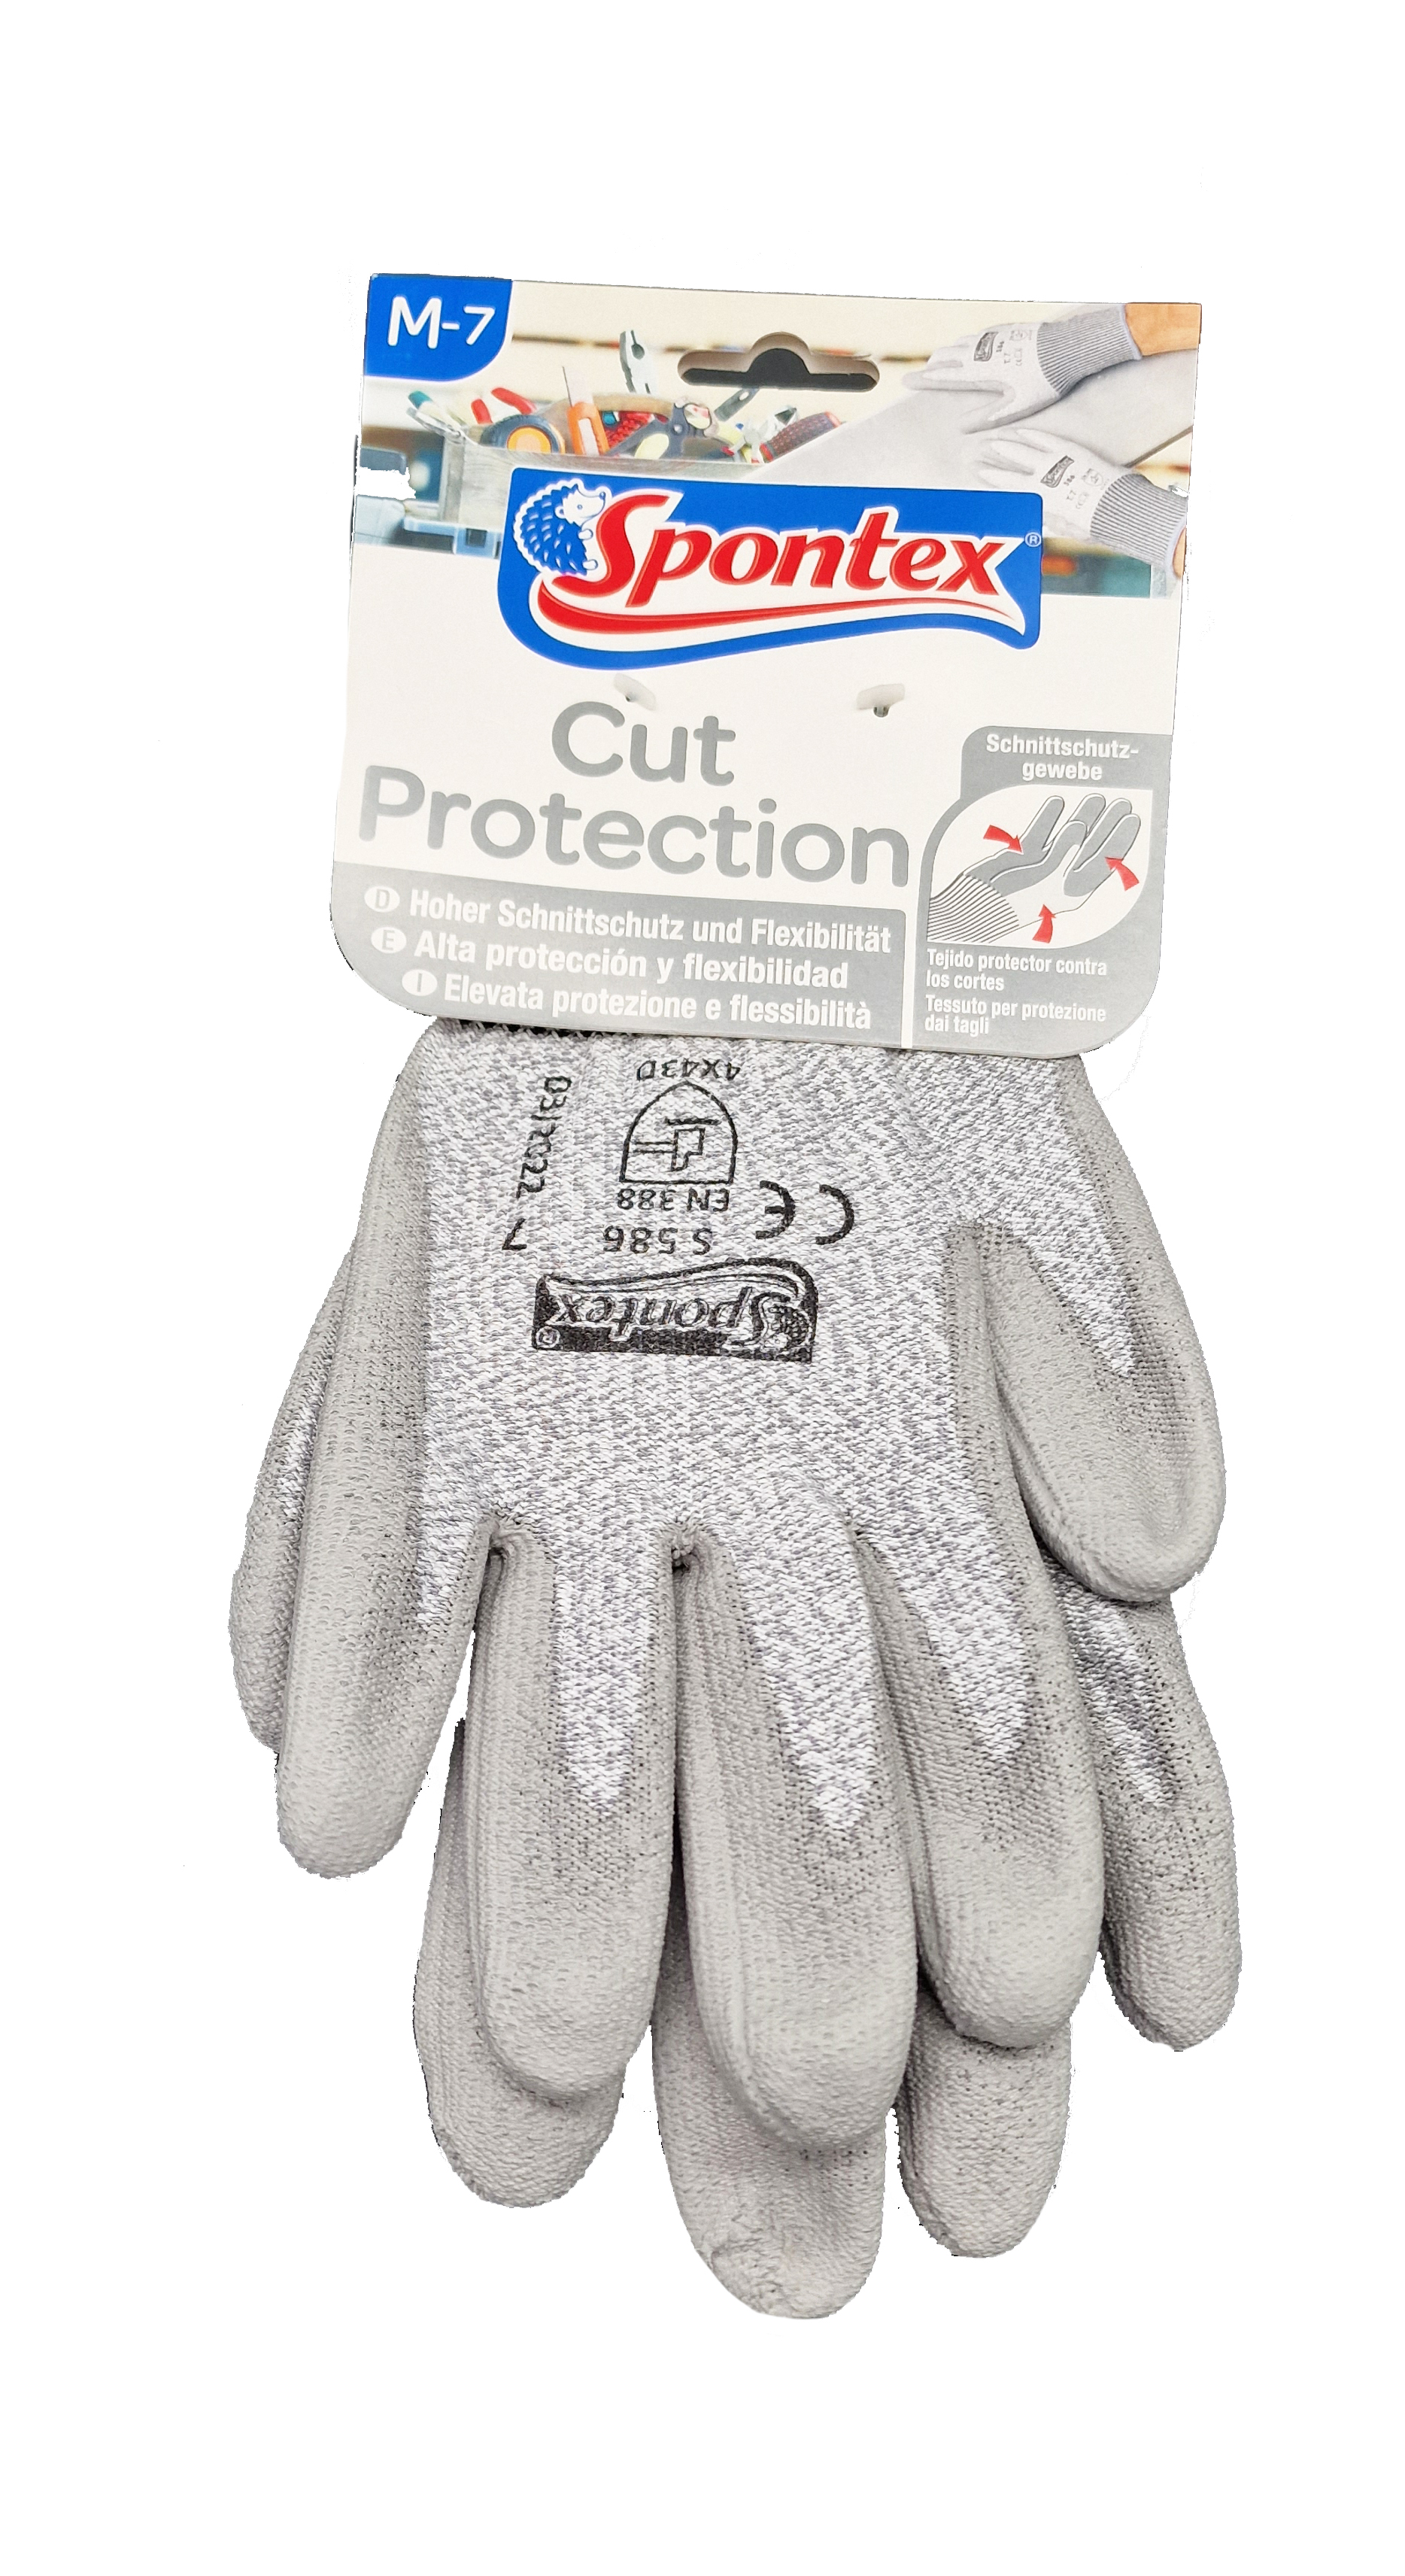 Spontex Schutzhandschuh Cut Protection Gr. 7